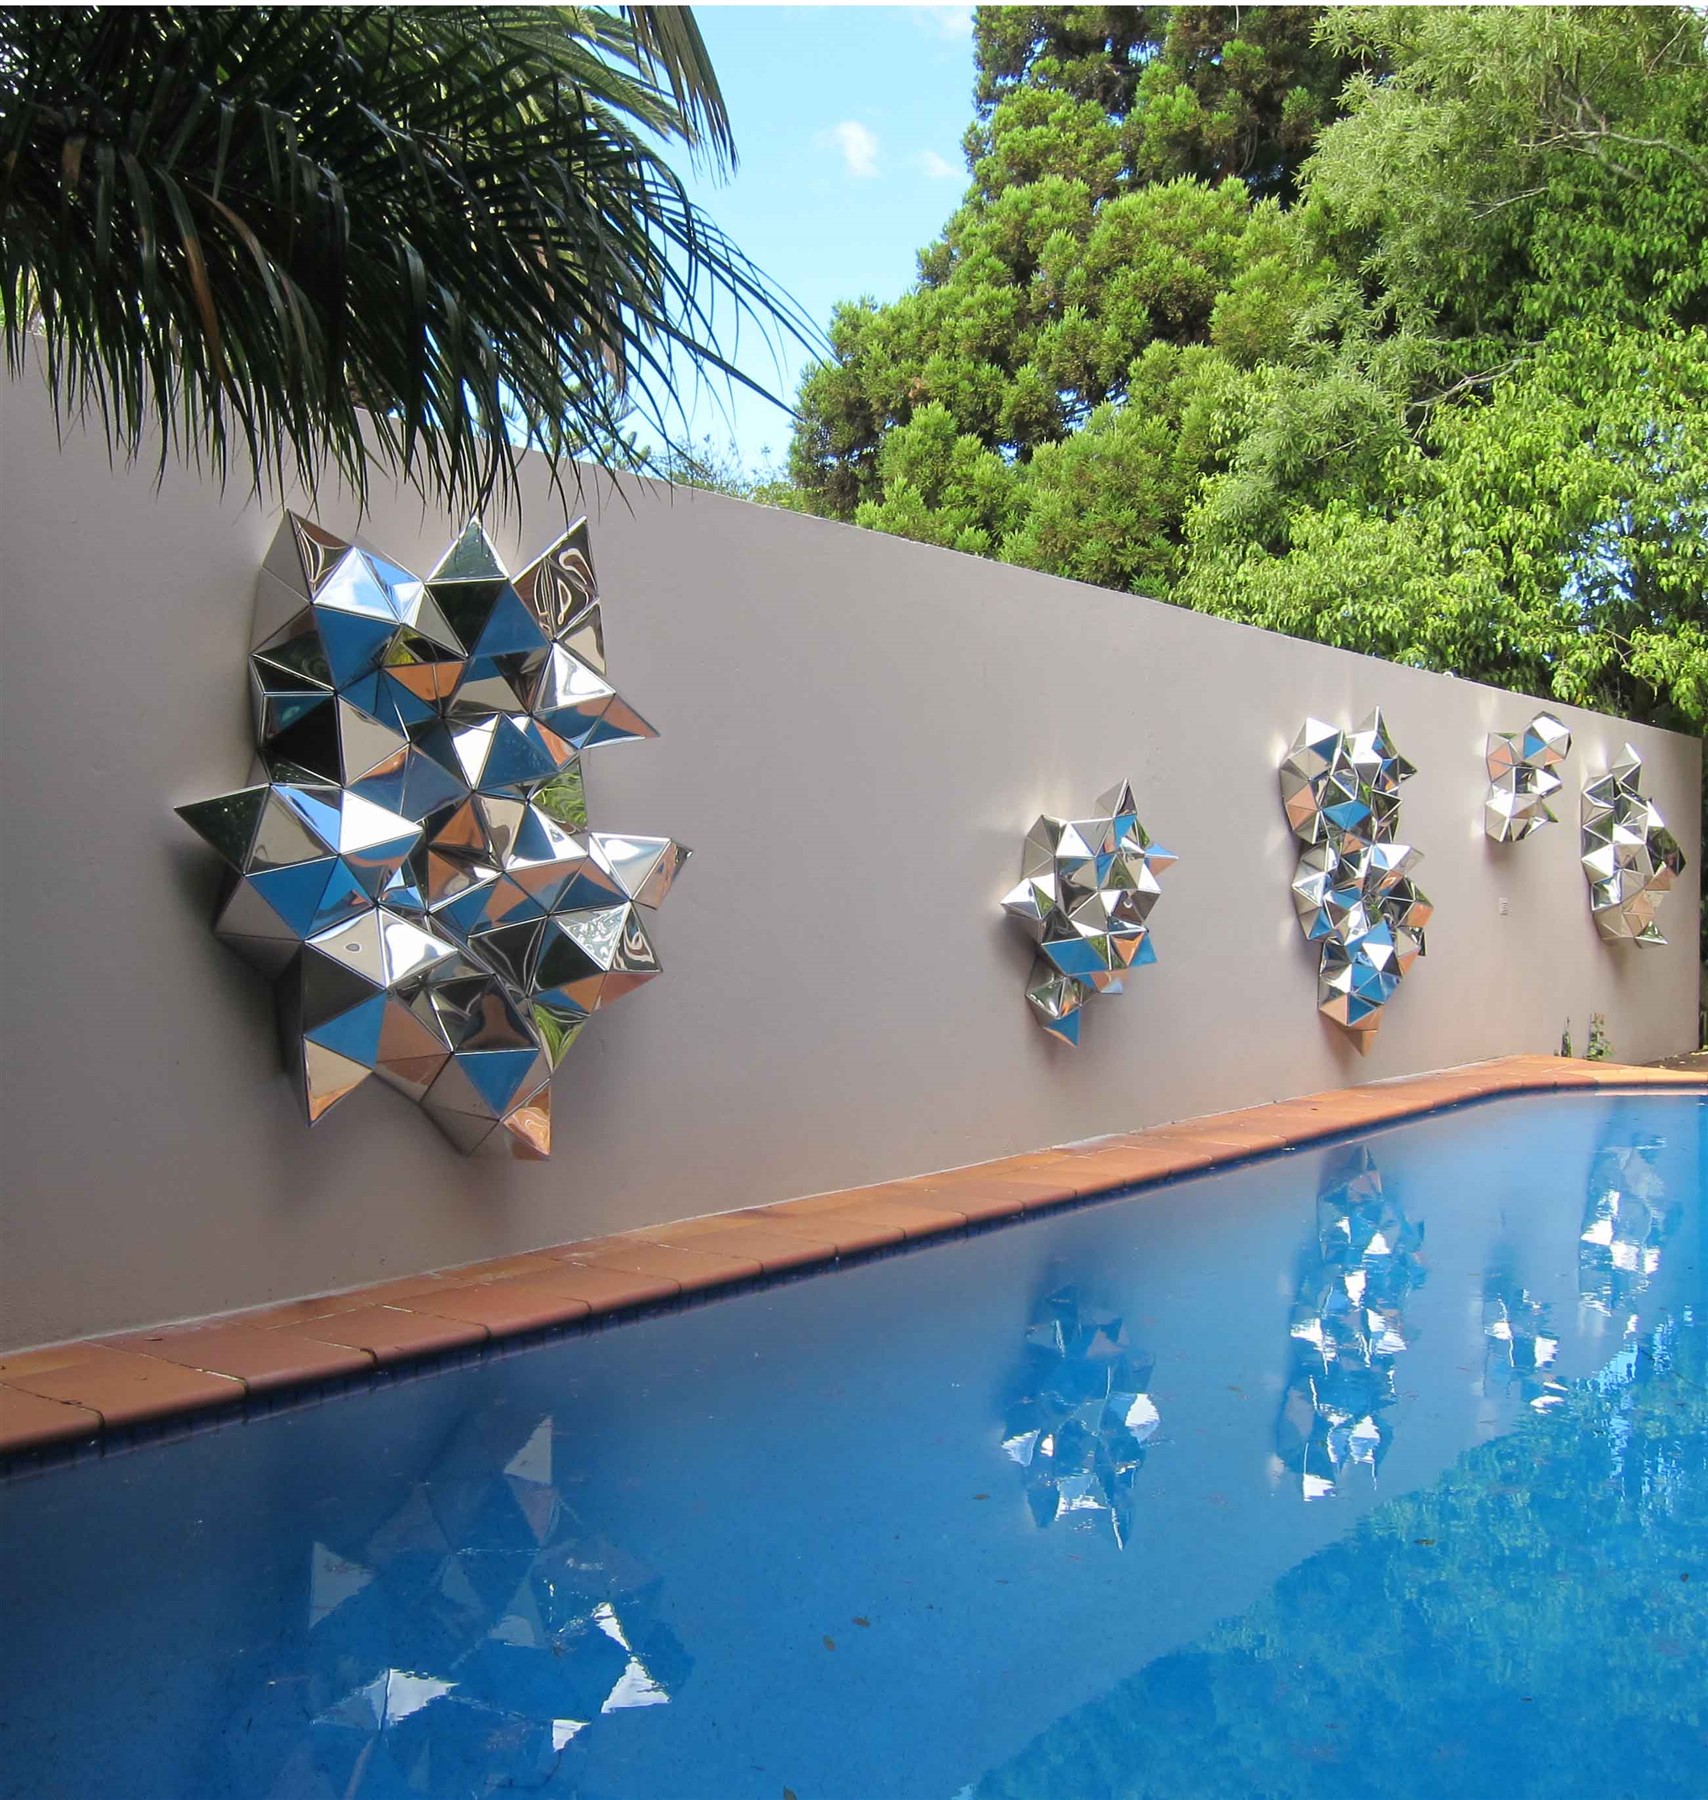 Diamond Wall Sculpture